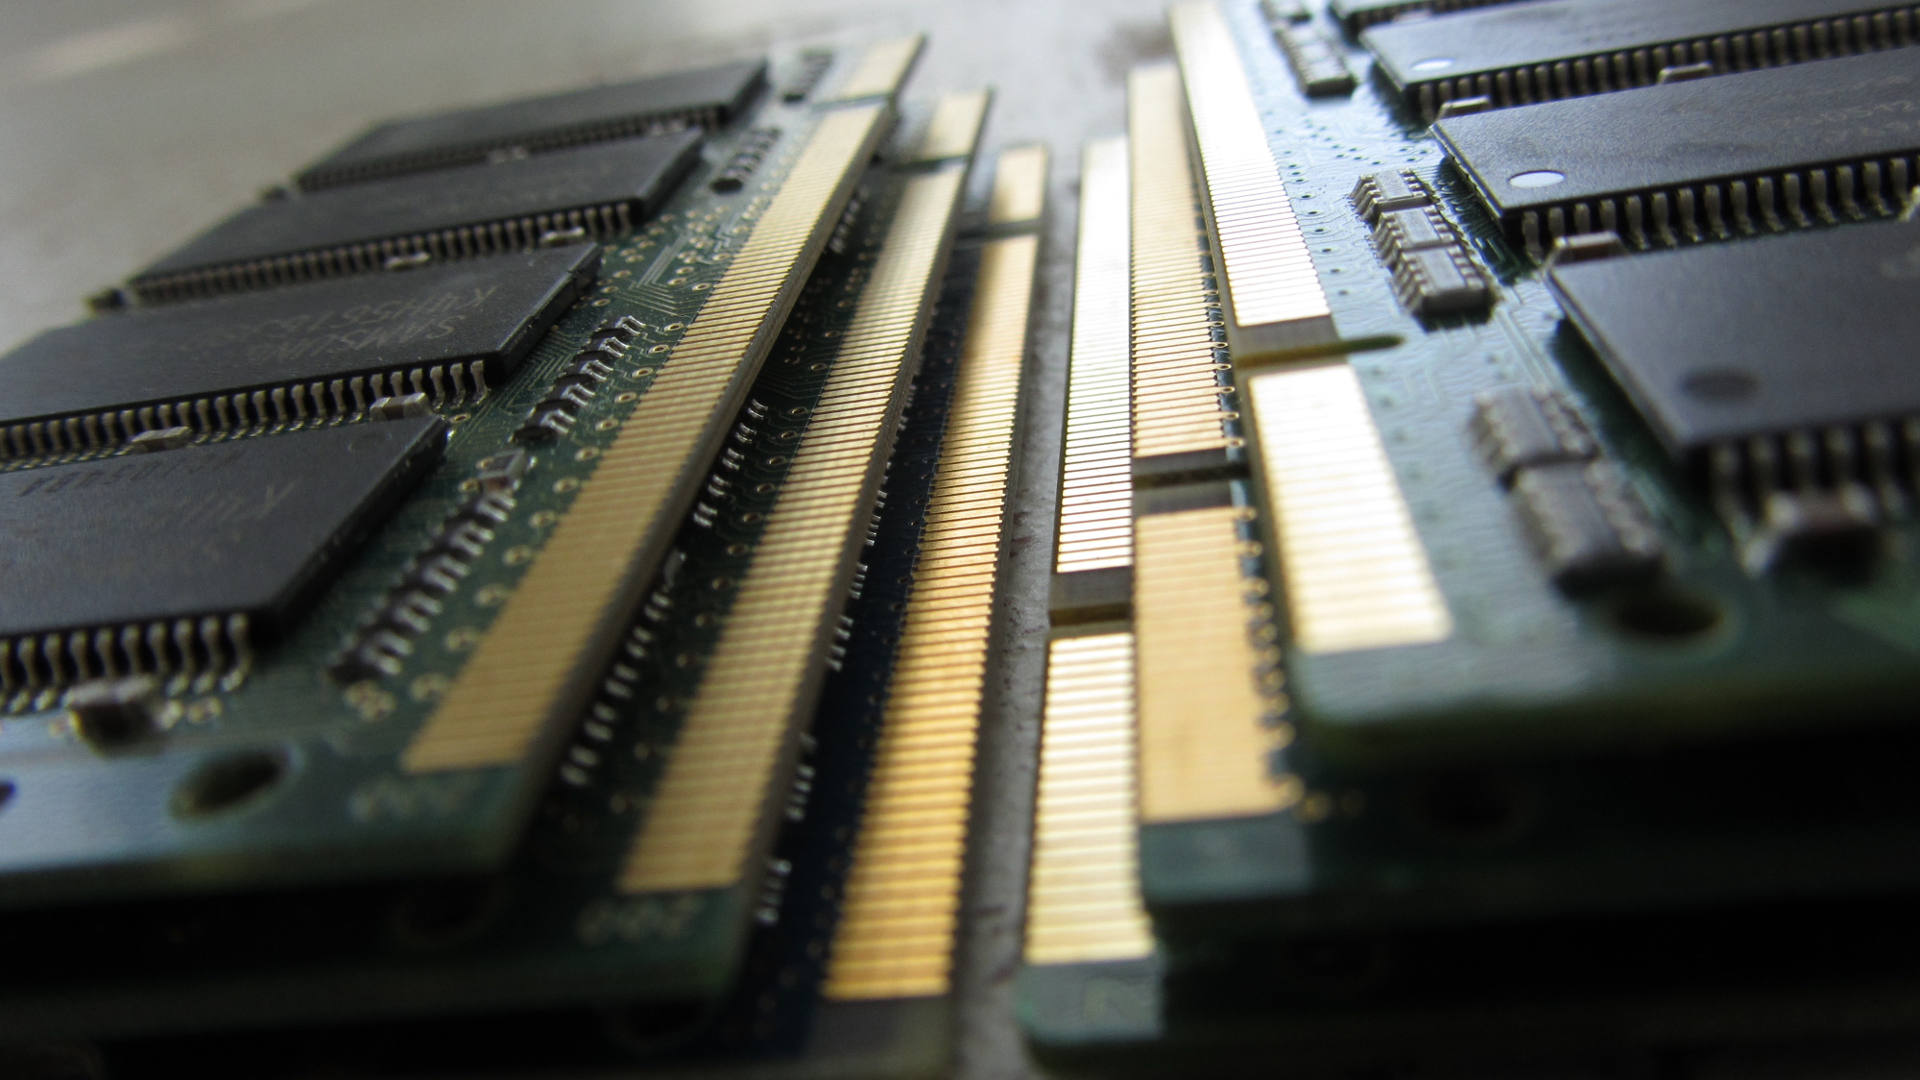 DDR2 memory modules